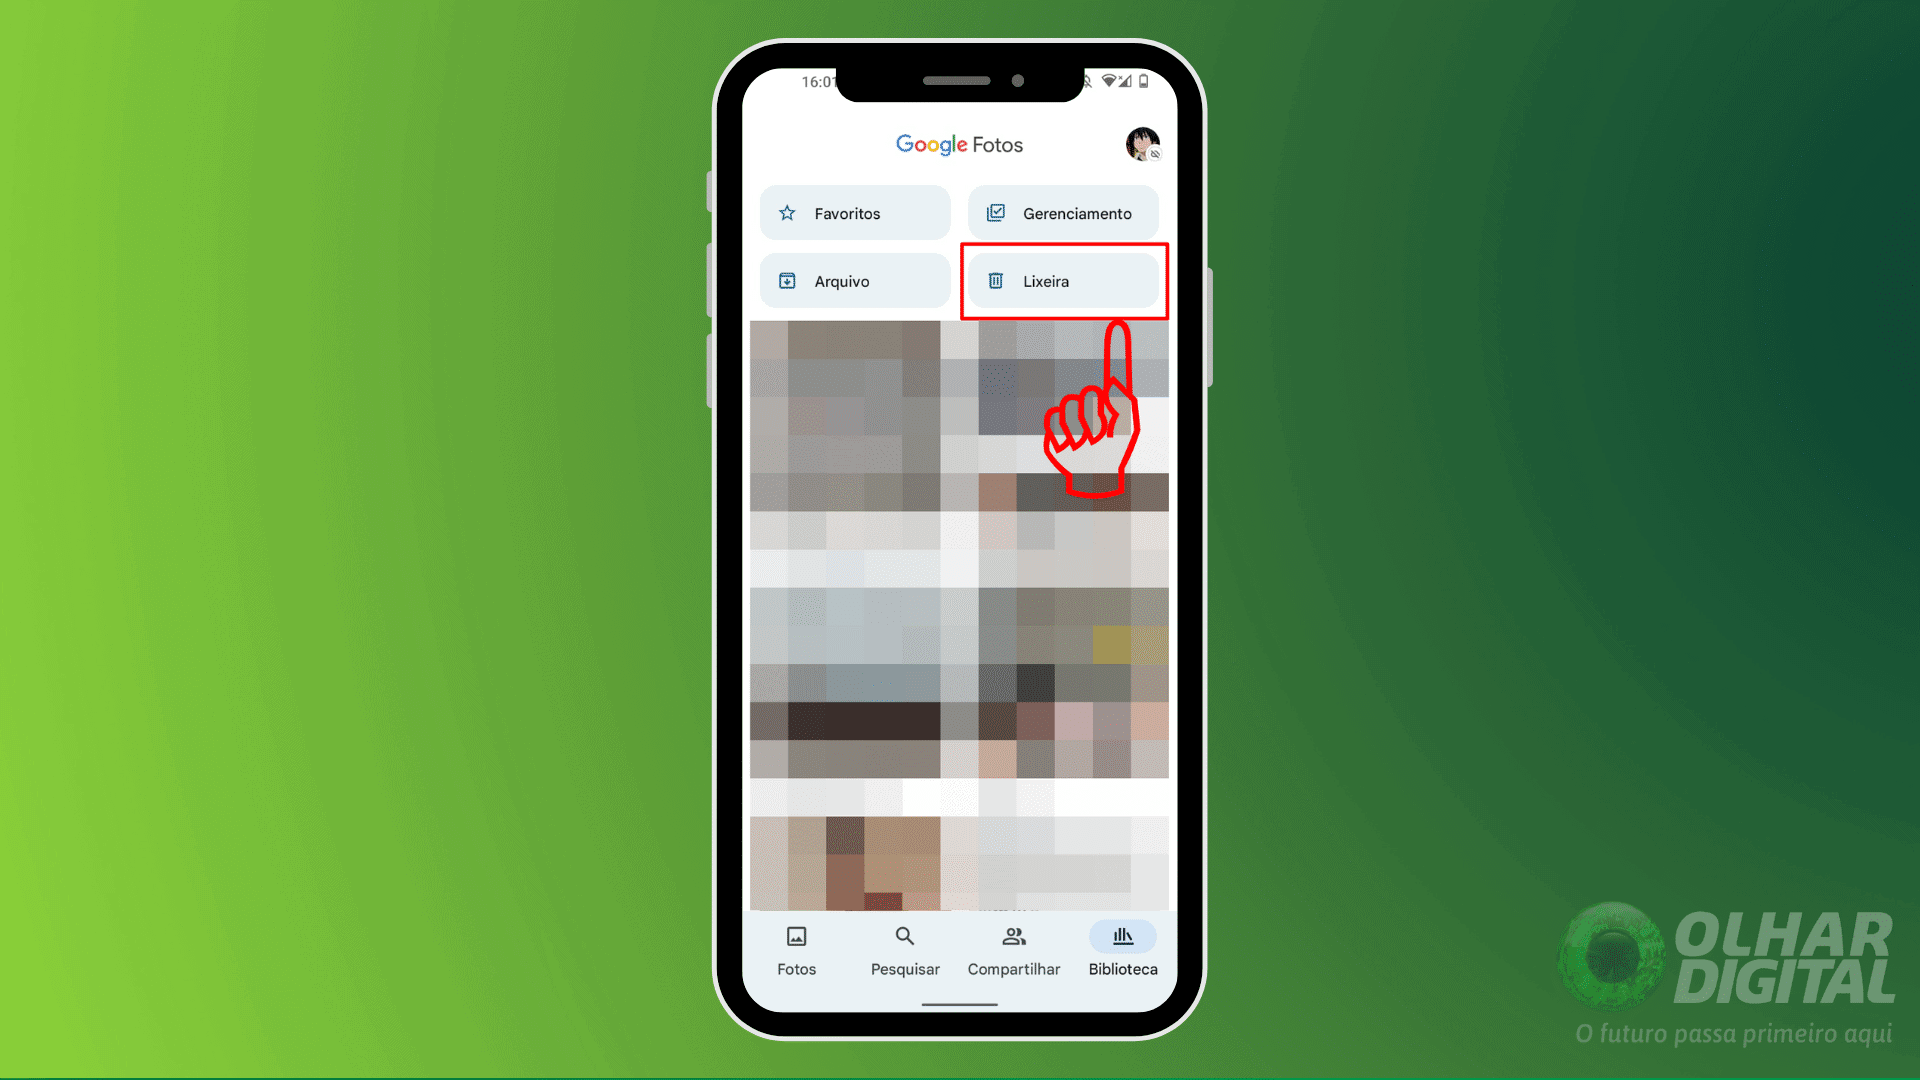 1-como-recuperar-fotos-apagados-do-celular-android Como recuperar fotos apagadas do seu celular Android